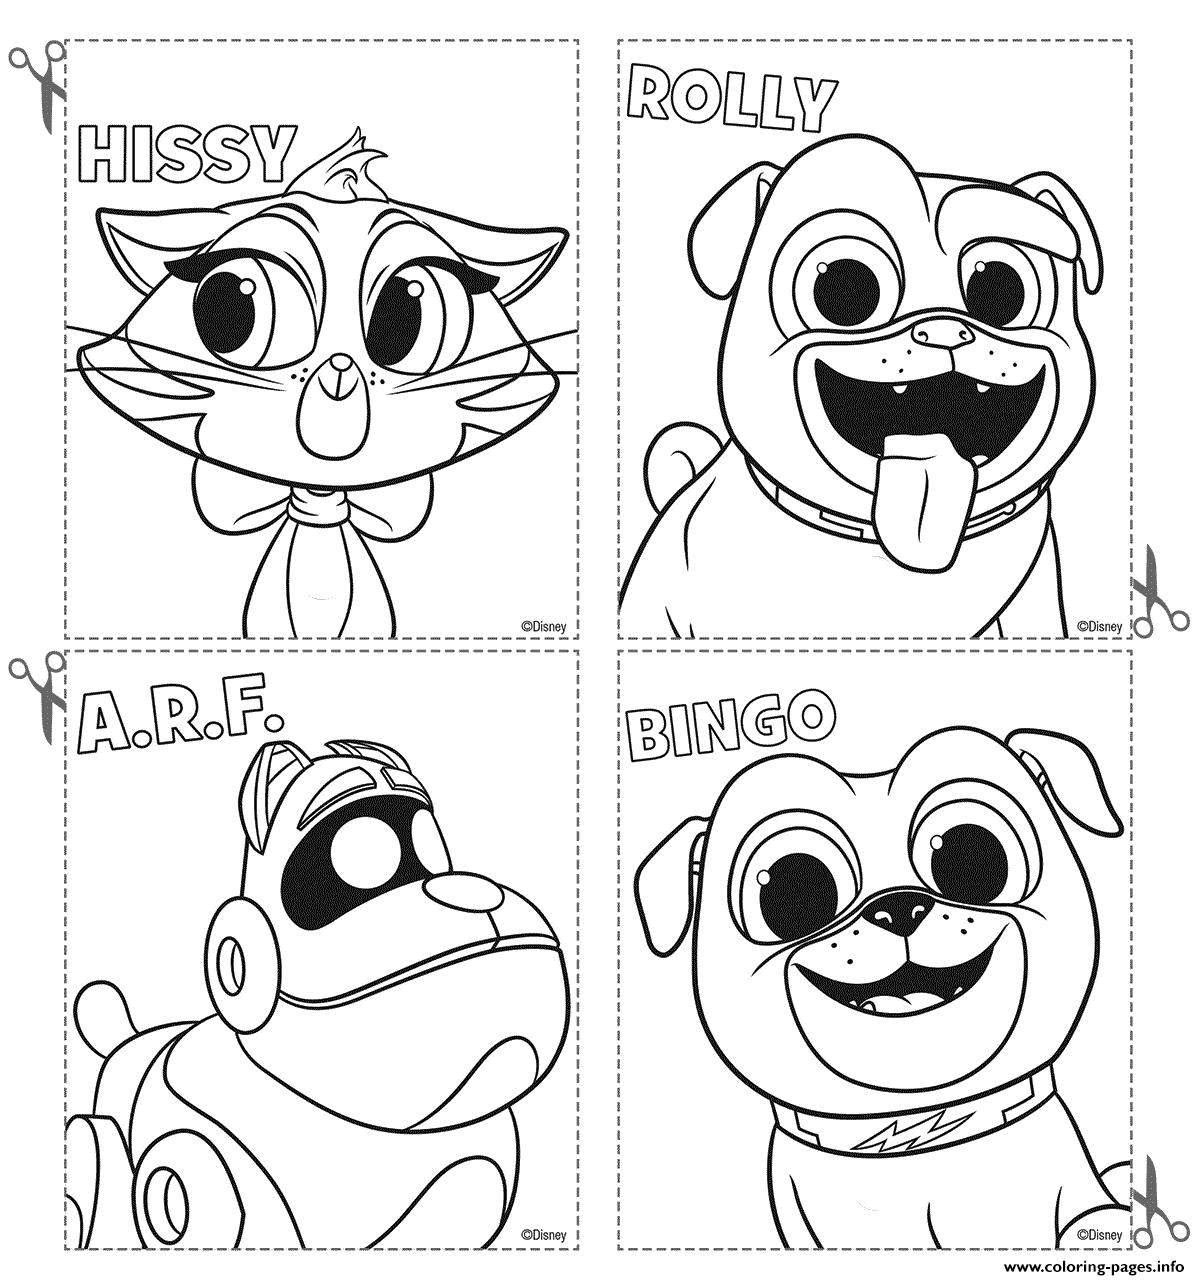 Disney Puppy Dog Pals Cards Hissy Rolly ARF Bingo coloring